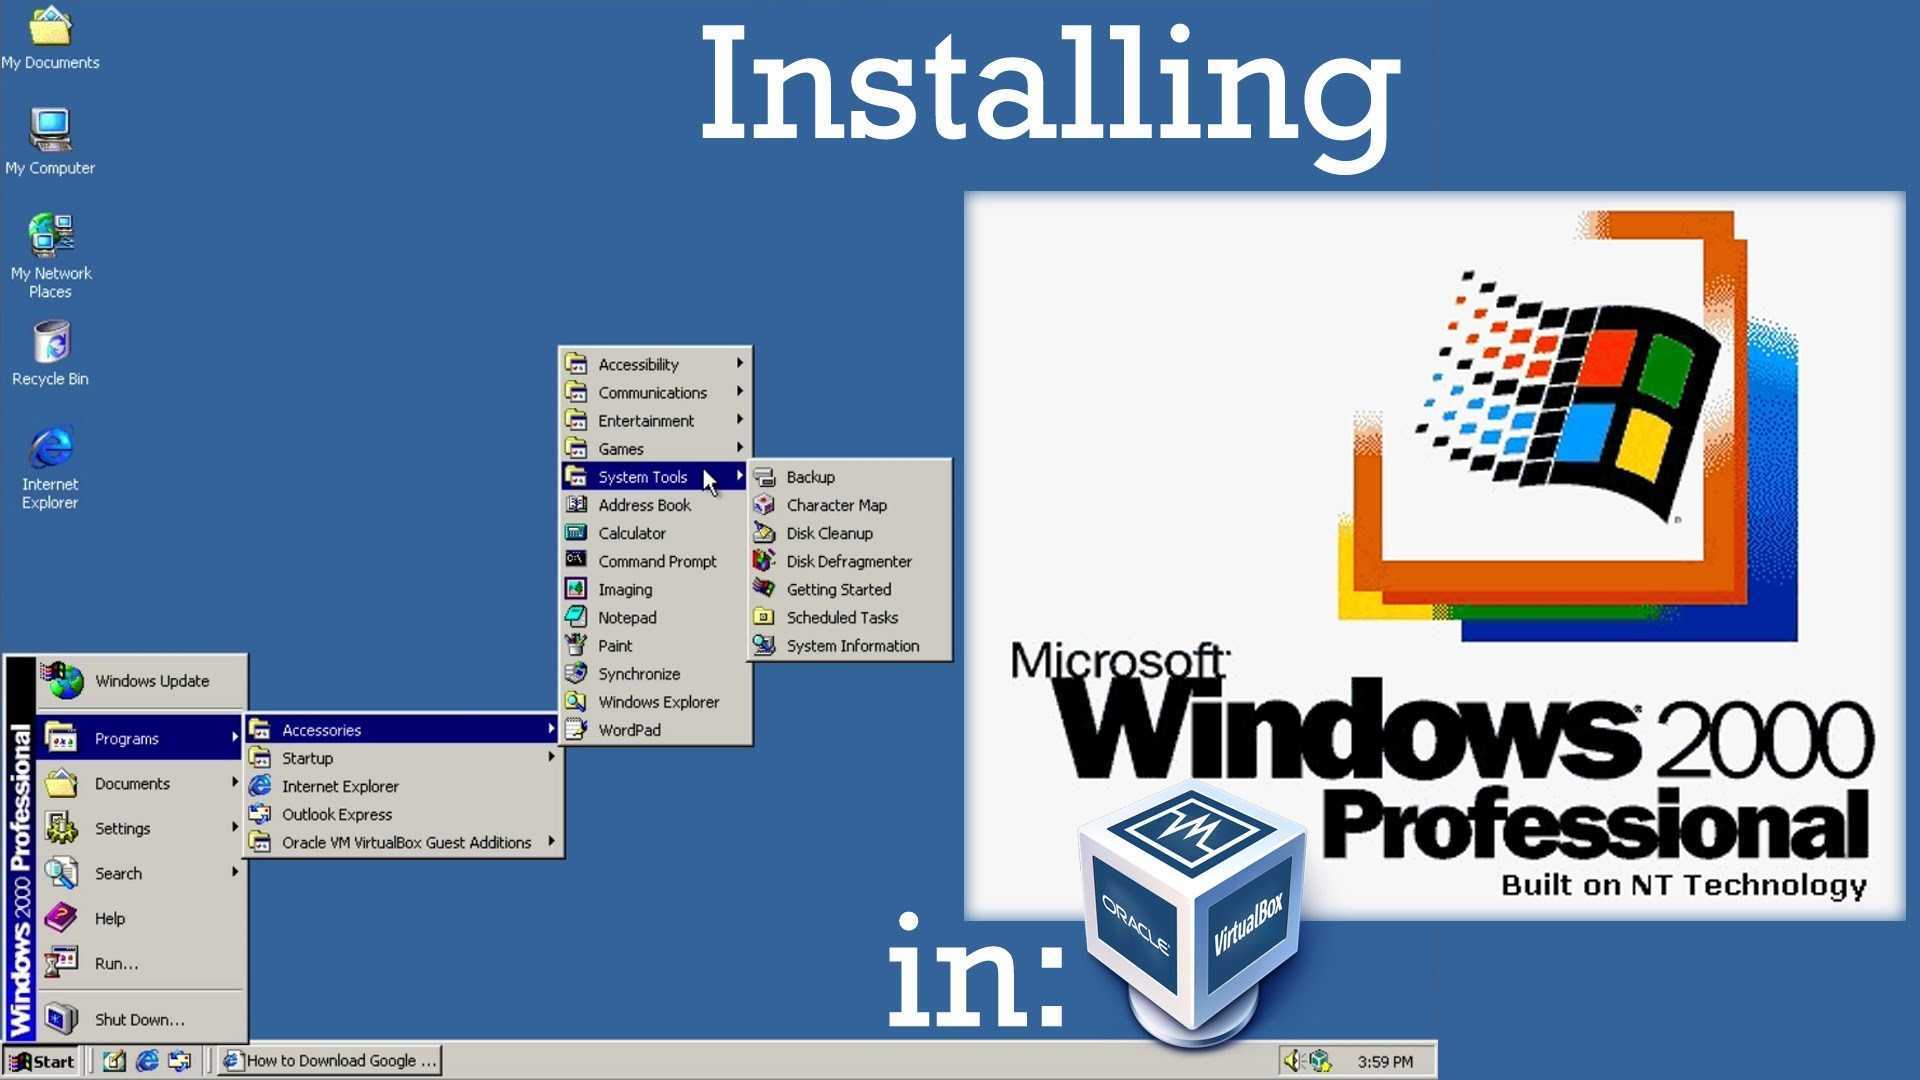 Windows 2000 professional - 17 февраля 2000 года